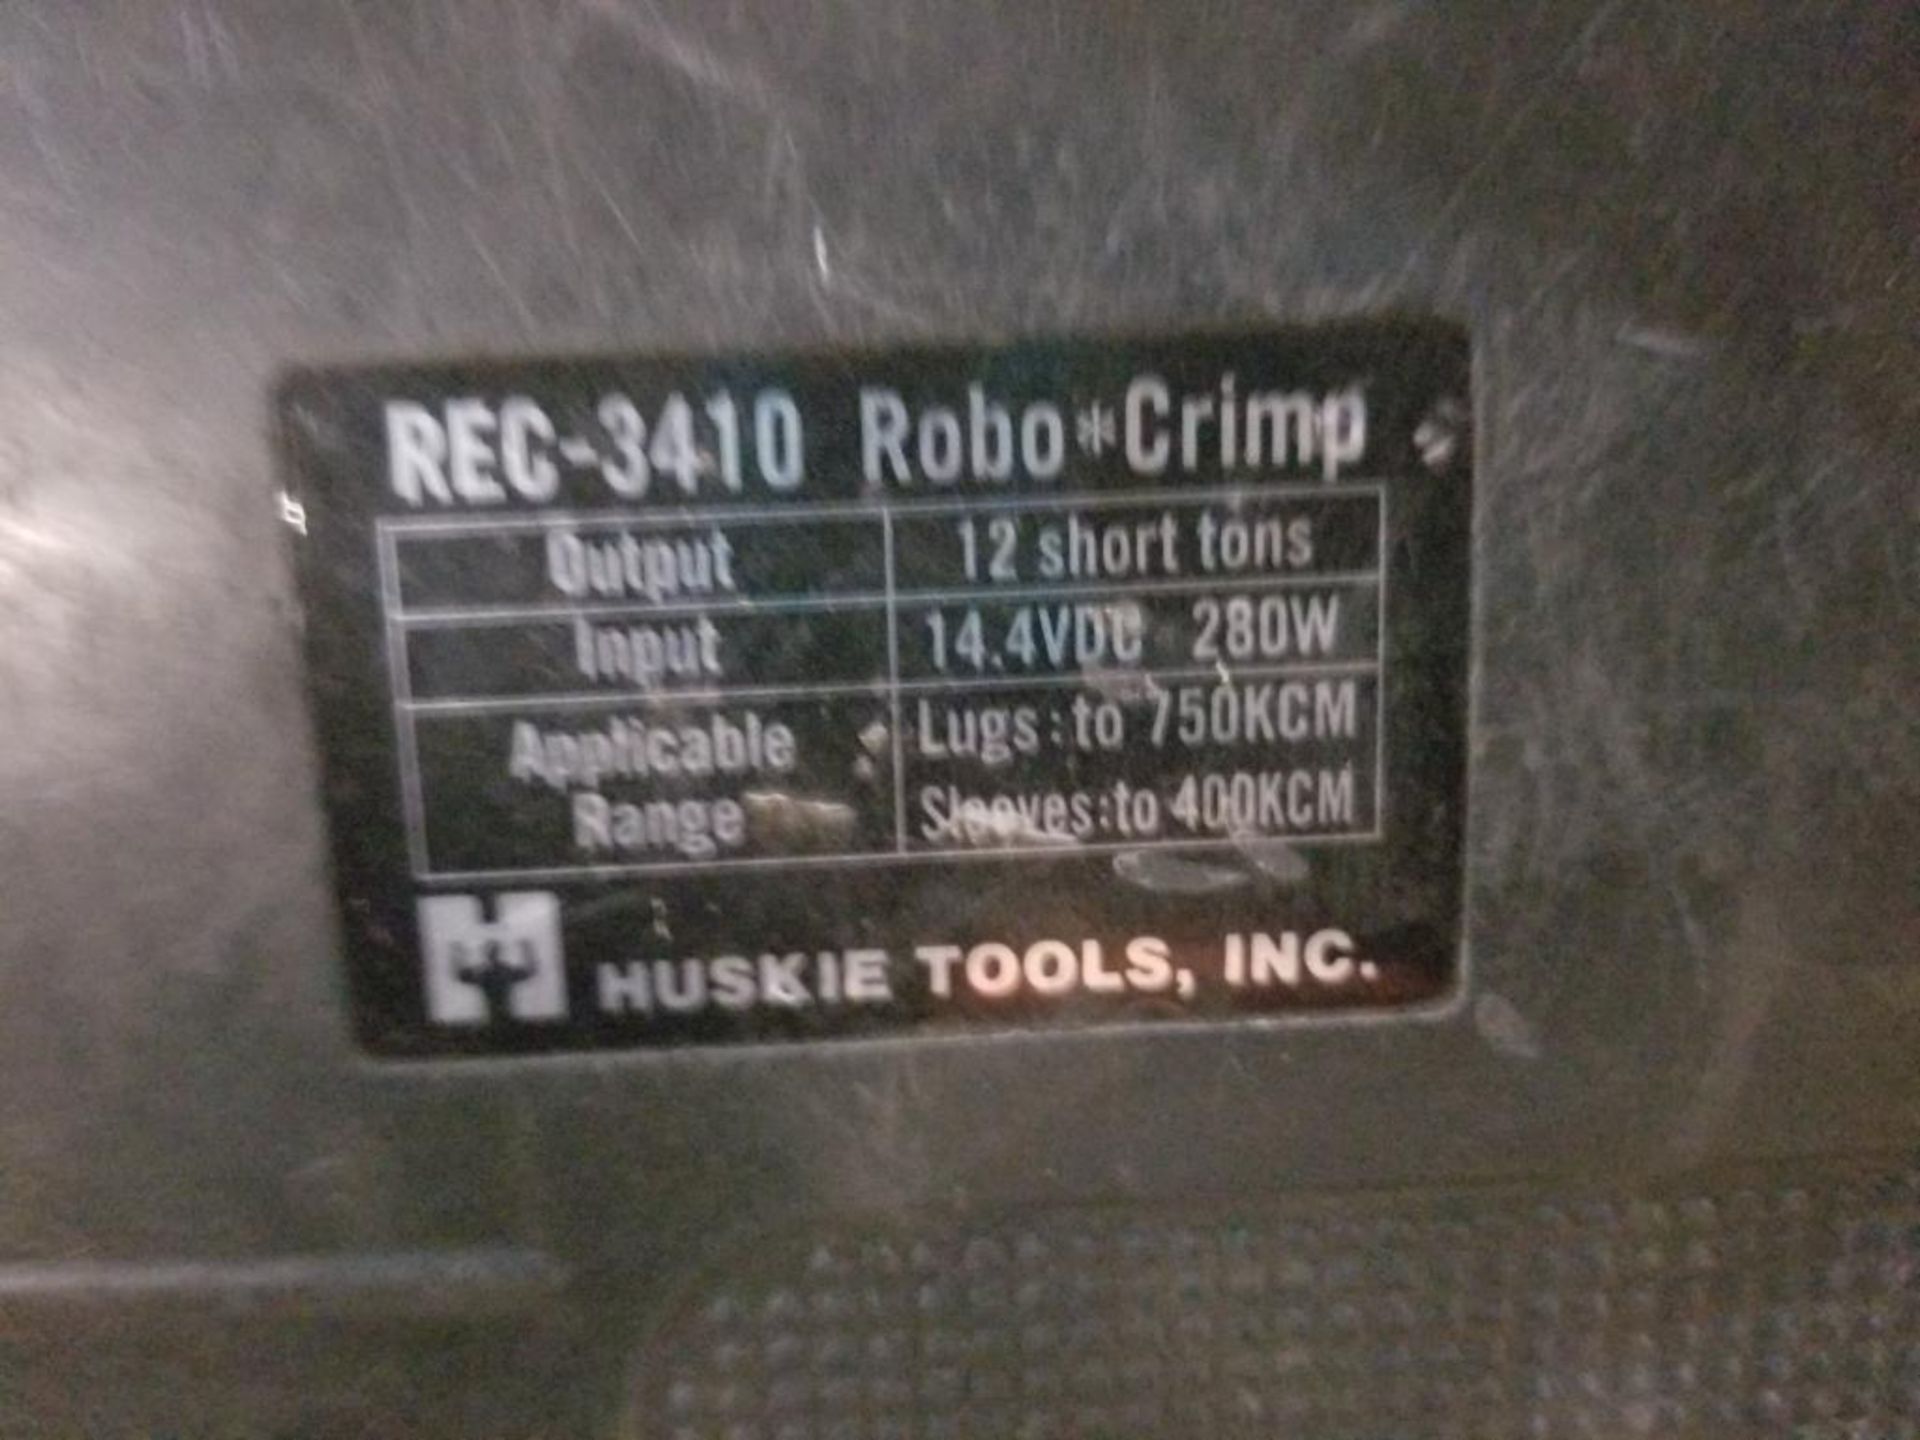 Huskie Robo-Crimp battery operated crimping machine. Model REC-3110. - Image 10 of 10